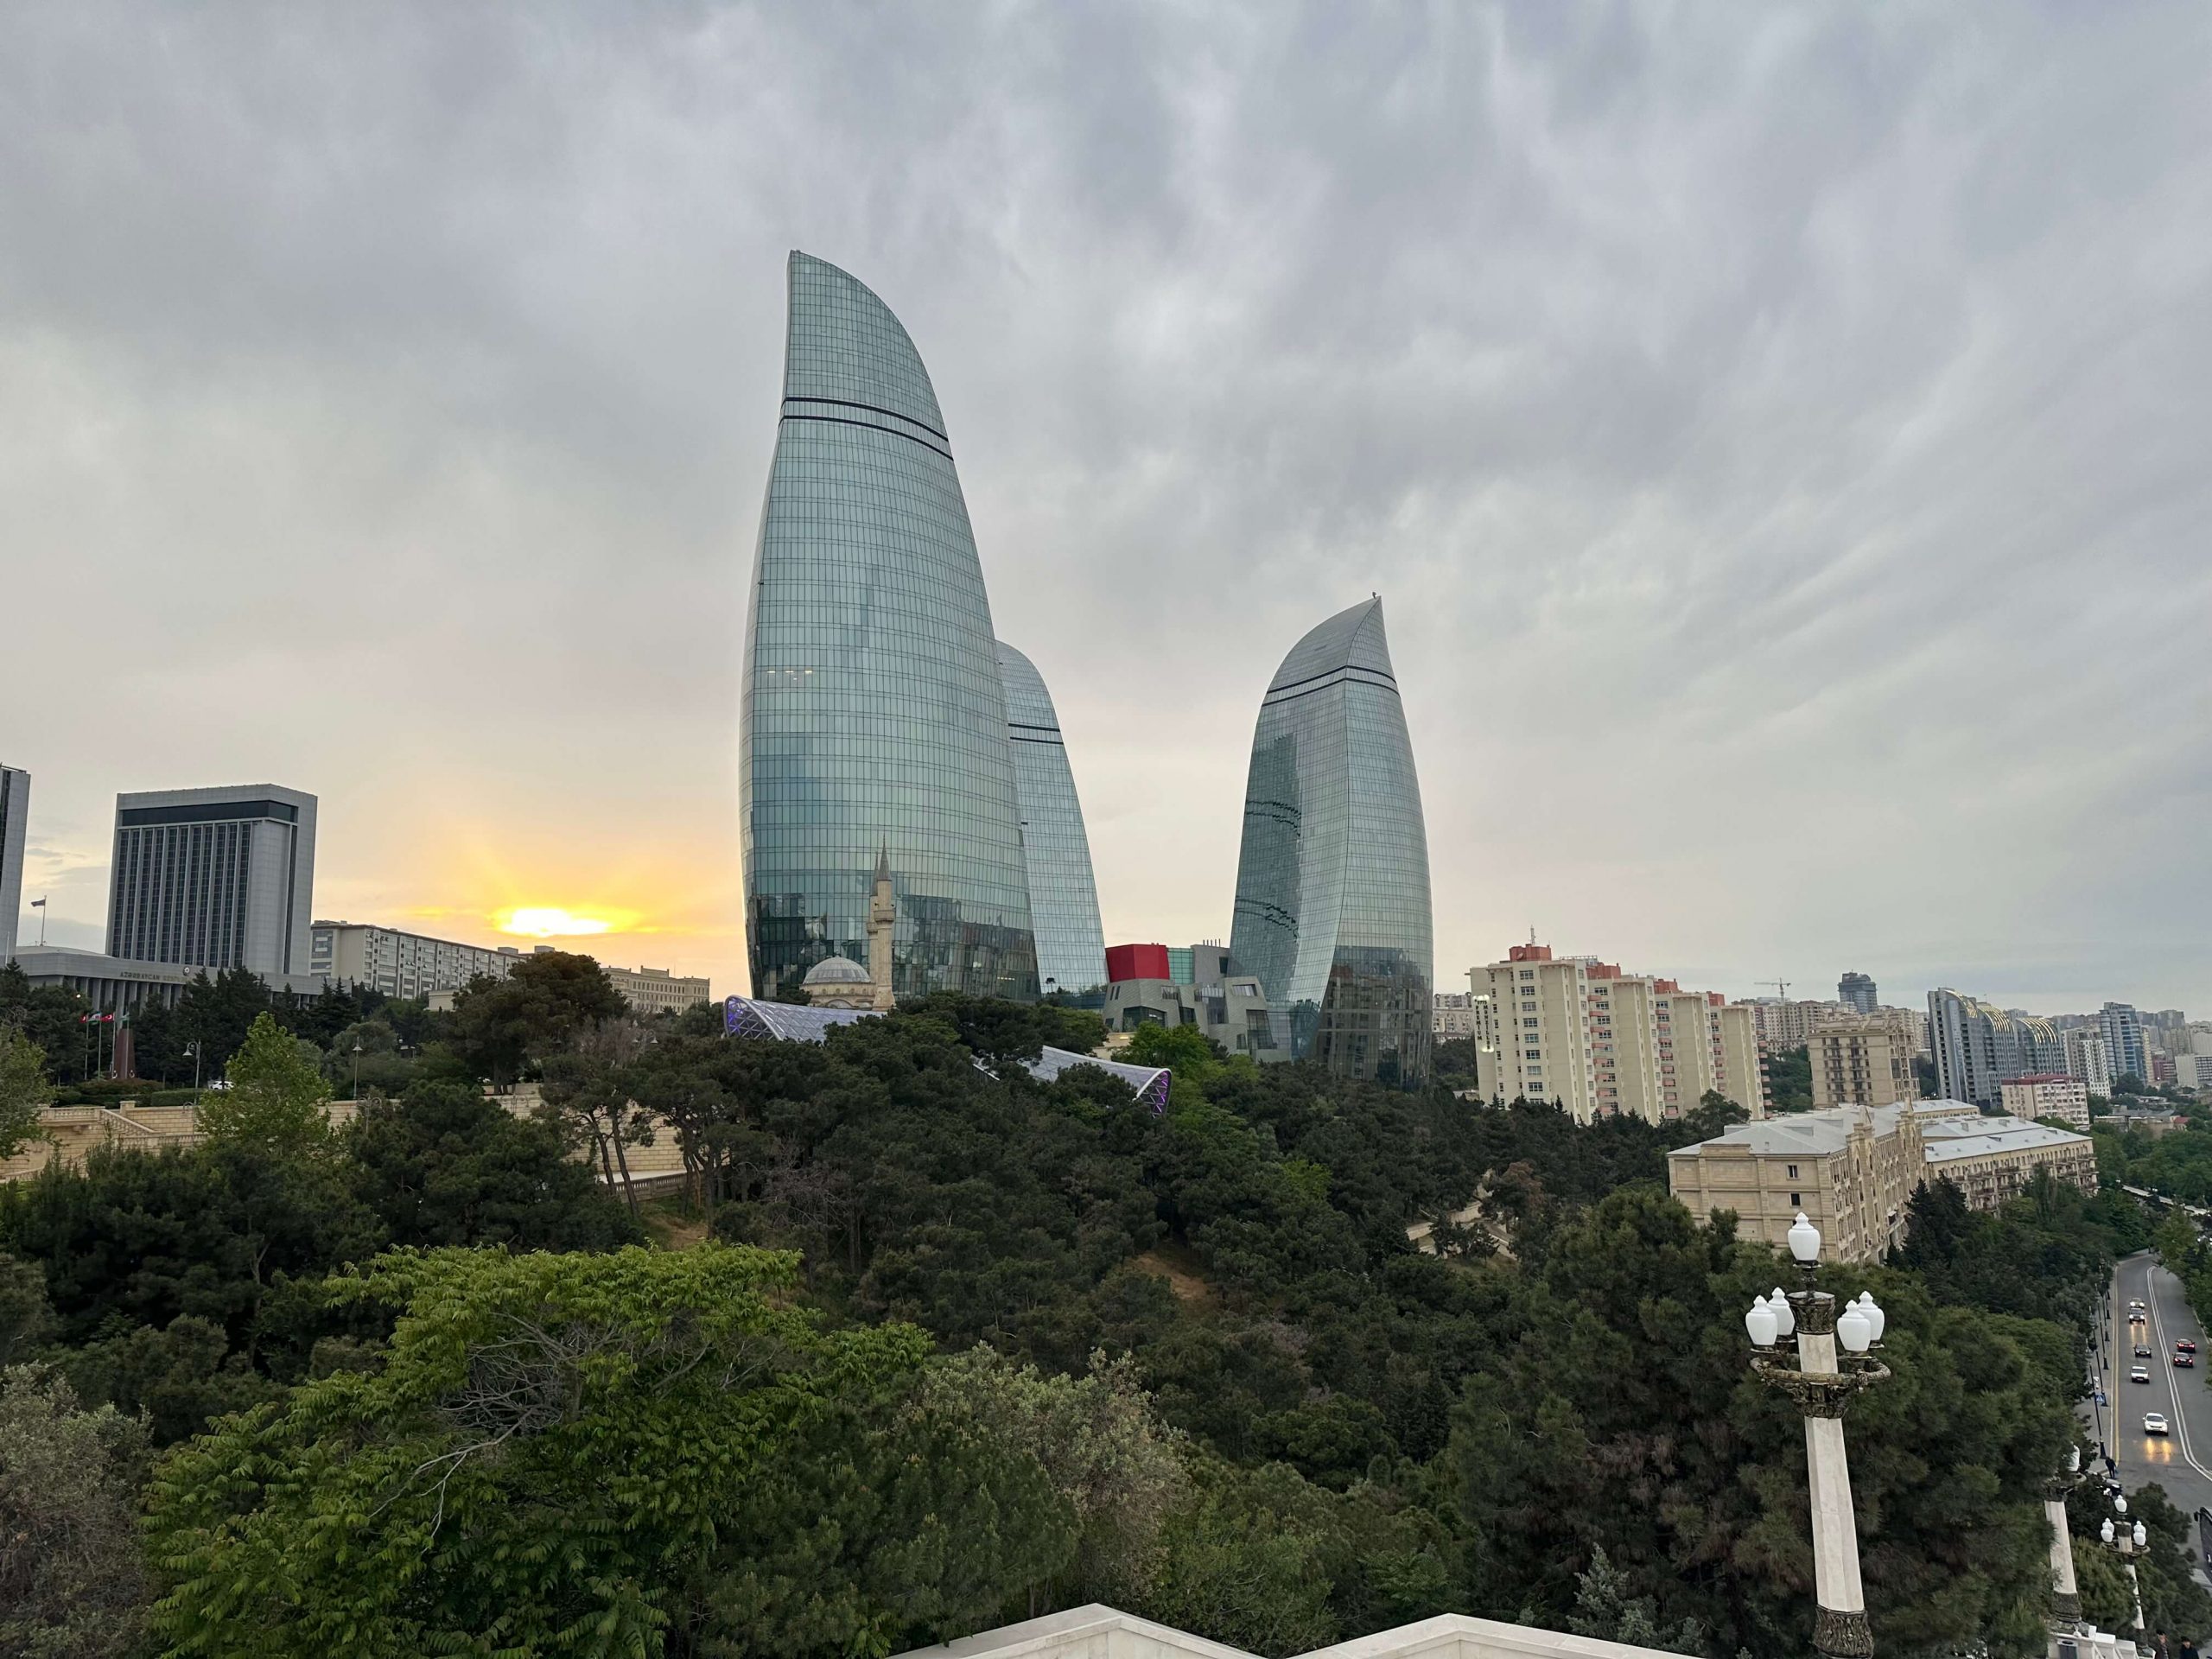 Welcome to Azerbaijan